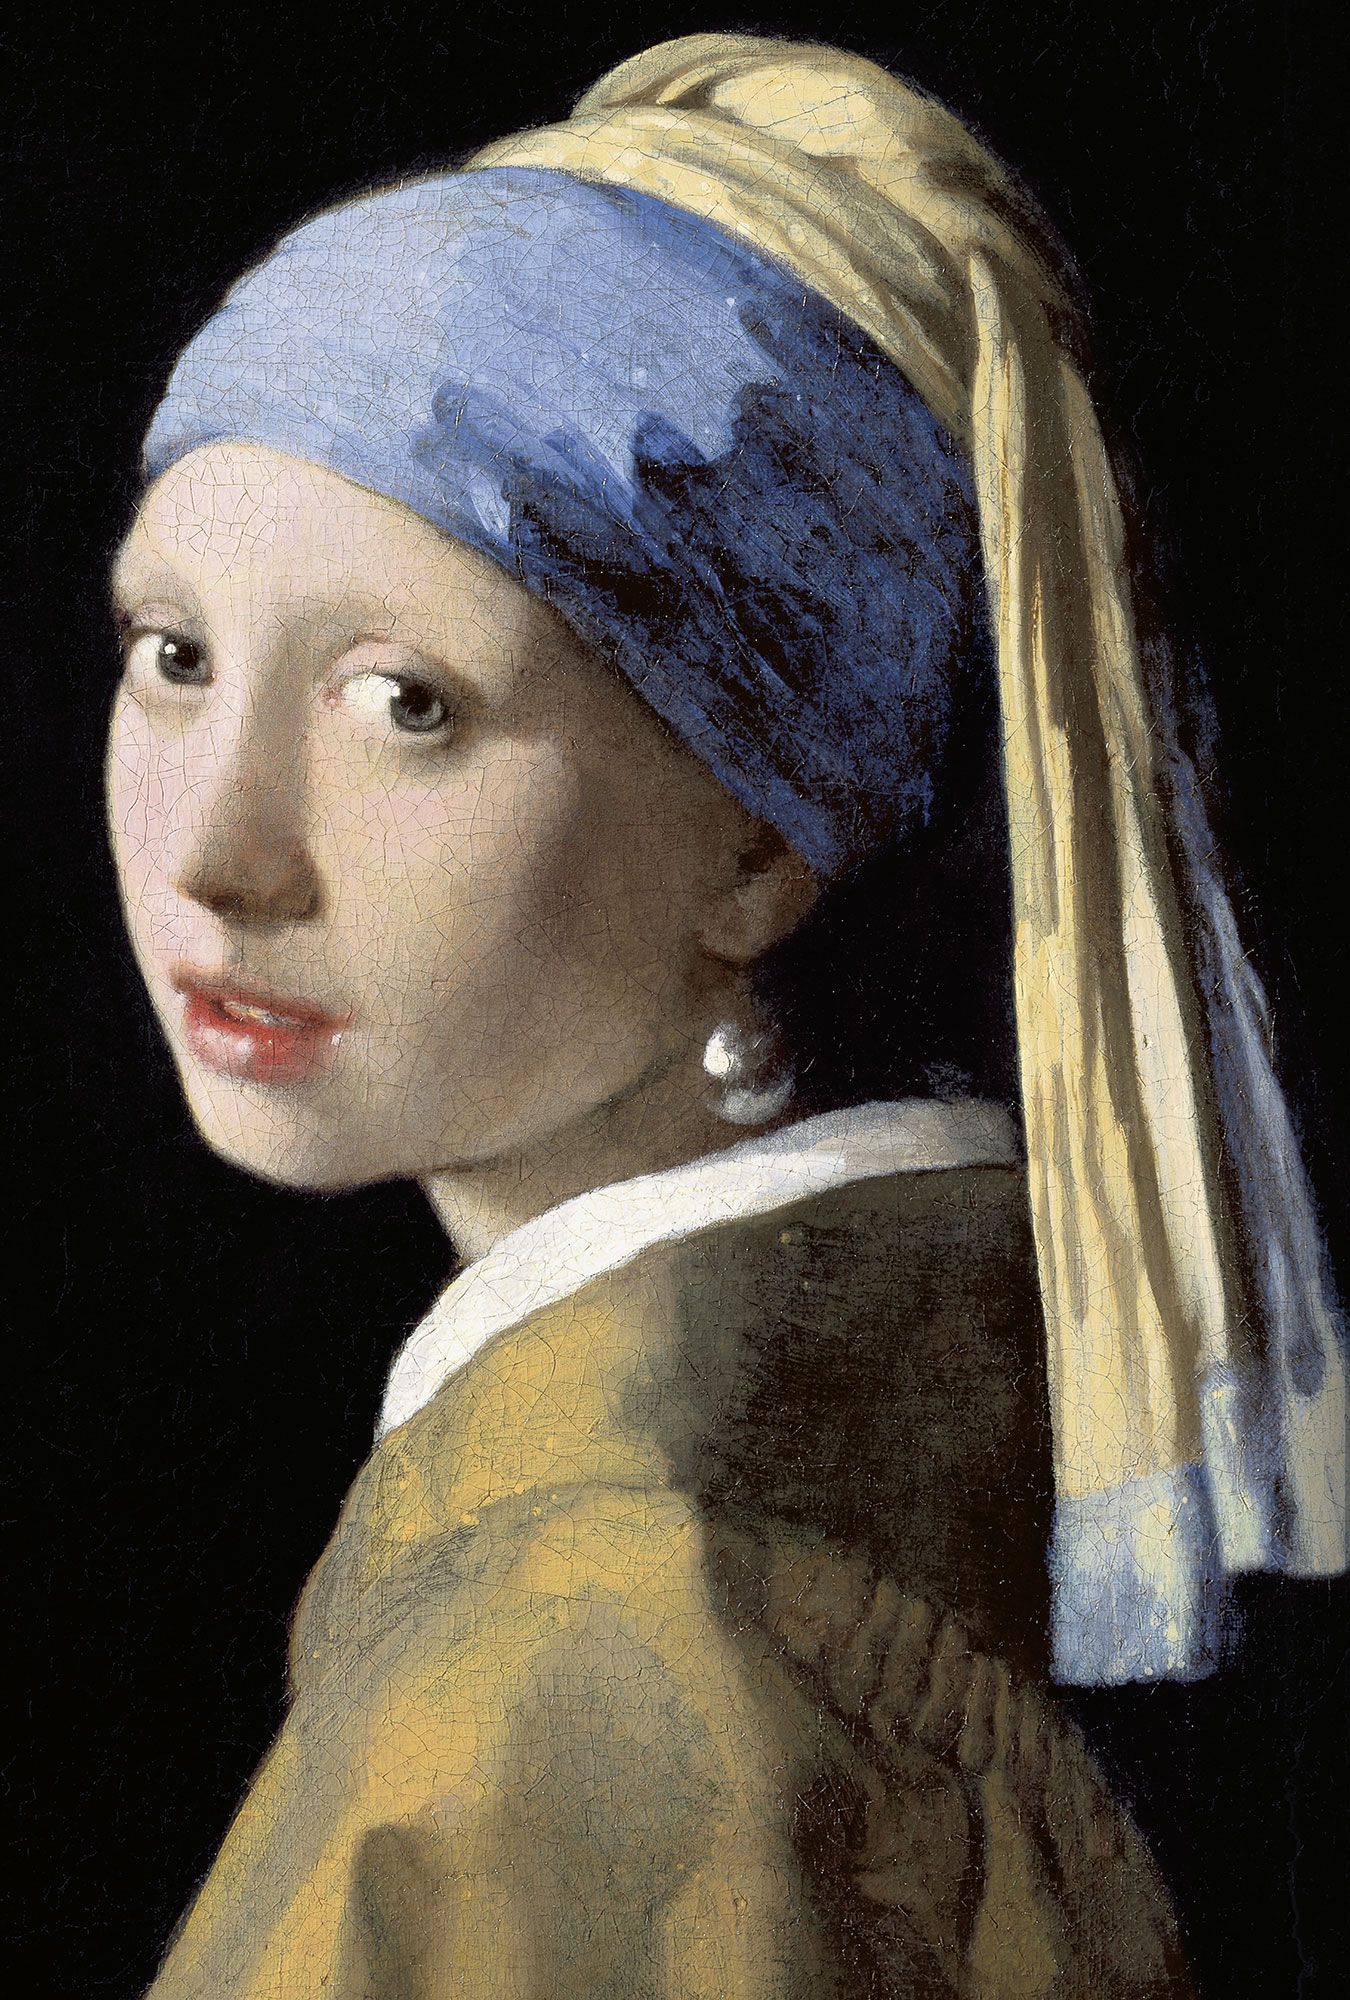 Vermeer the greatest exhibition